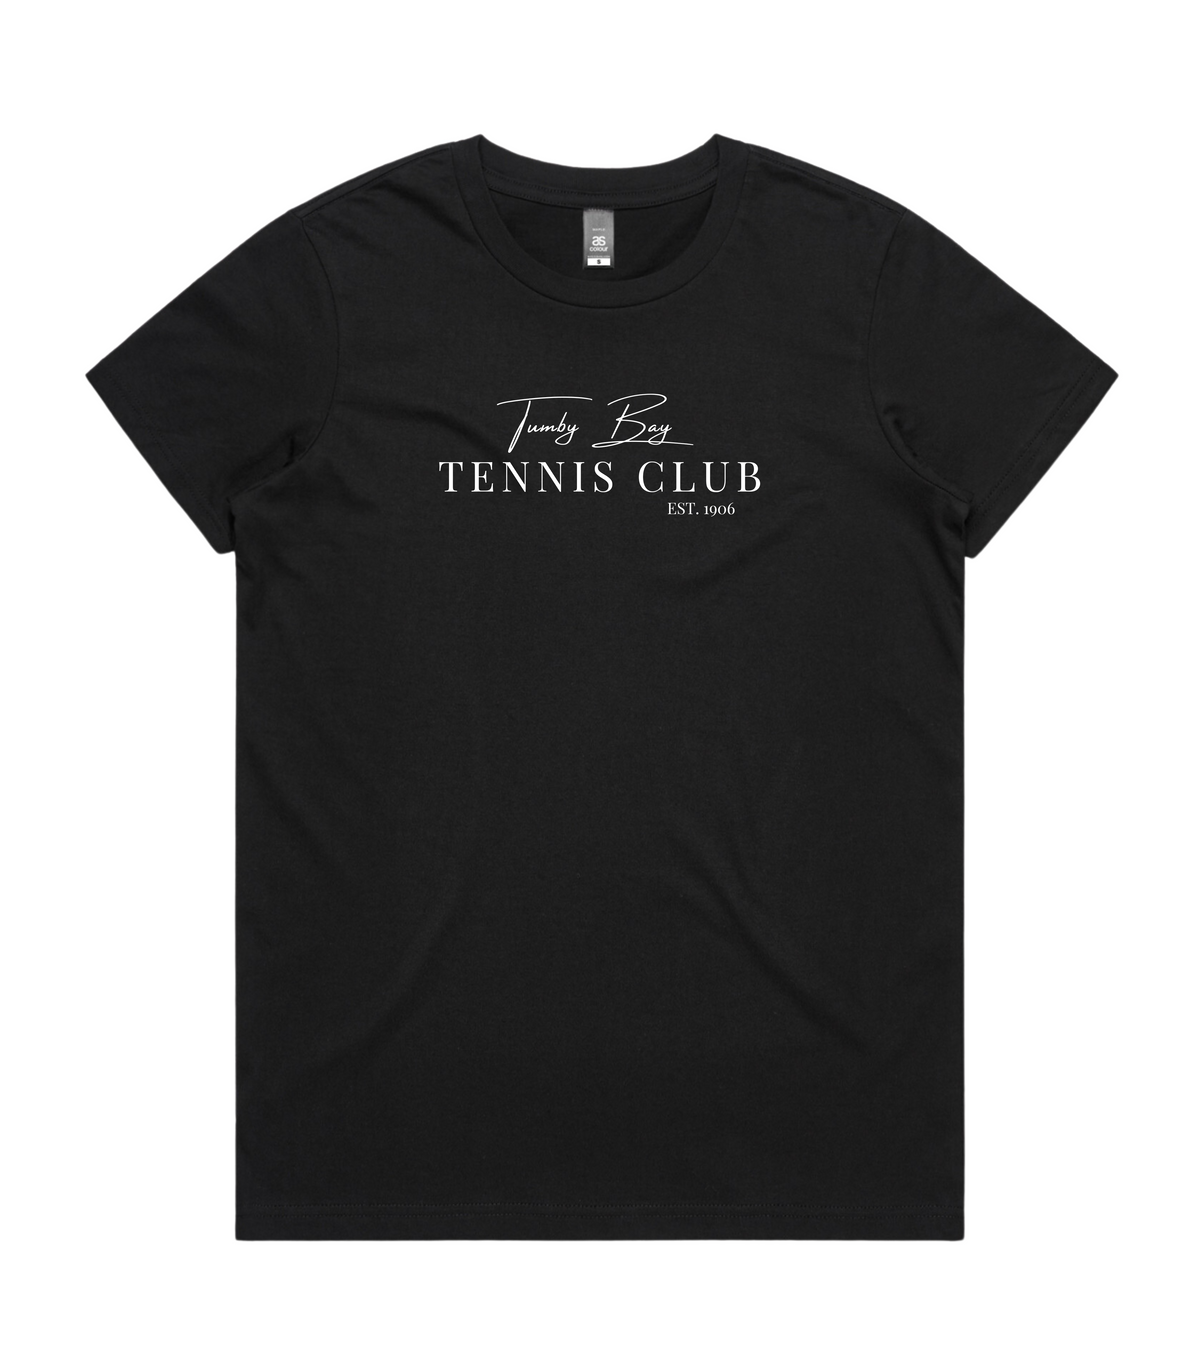 Tumby Bay Tennis Club Womens Maple Tee 4001-Collins Clothing Co